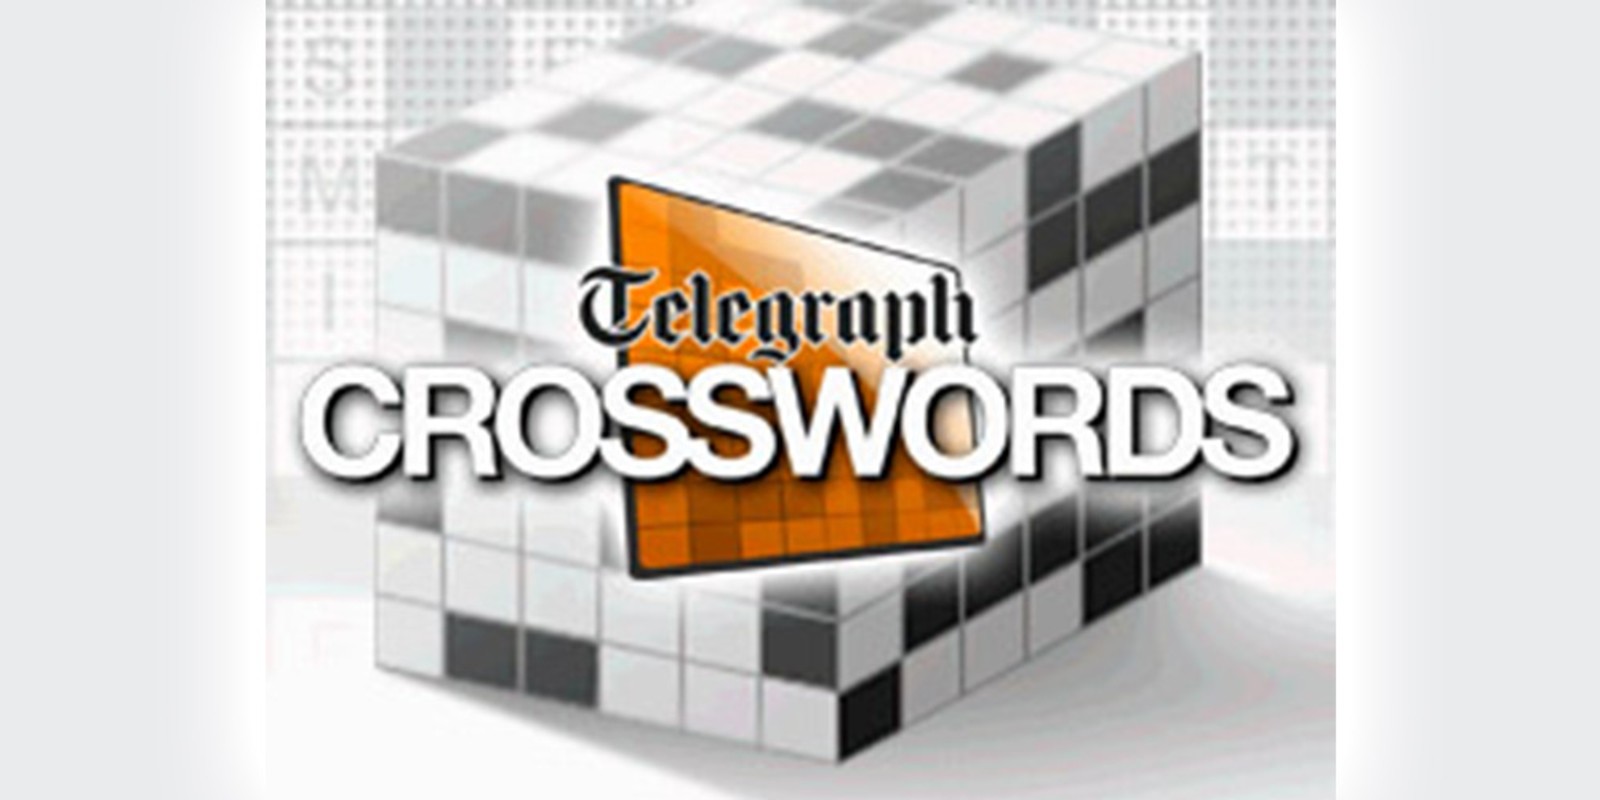 Telegraph Crosswords Nintendo DSiWare Games Nintendo